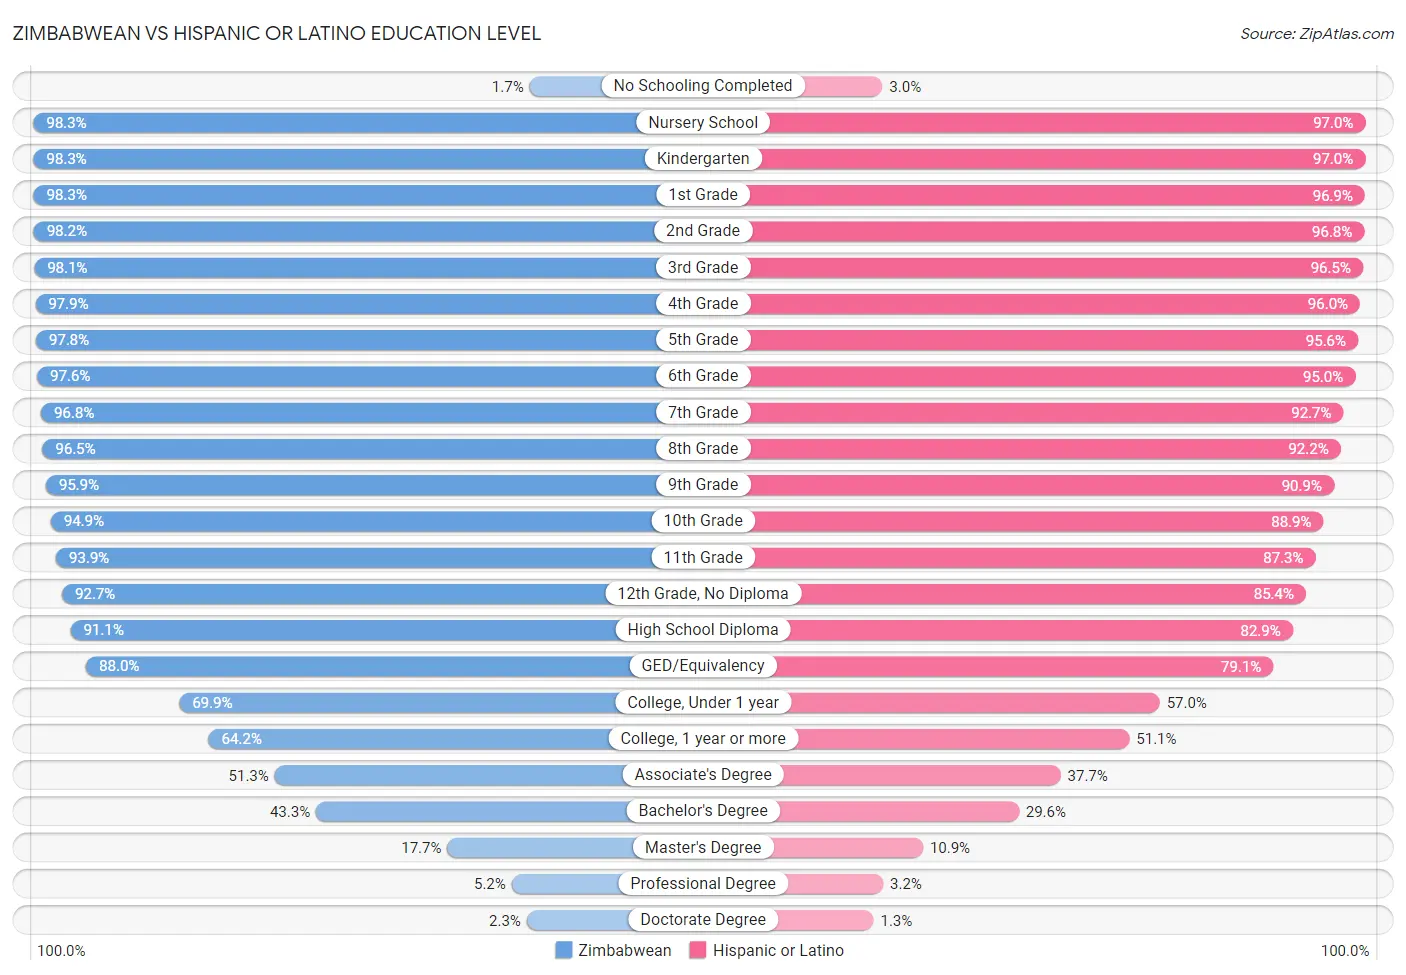 Zimbabwean vs Hispanic or Latino Education Level